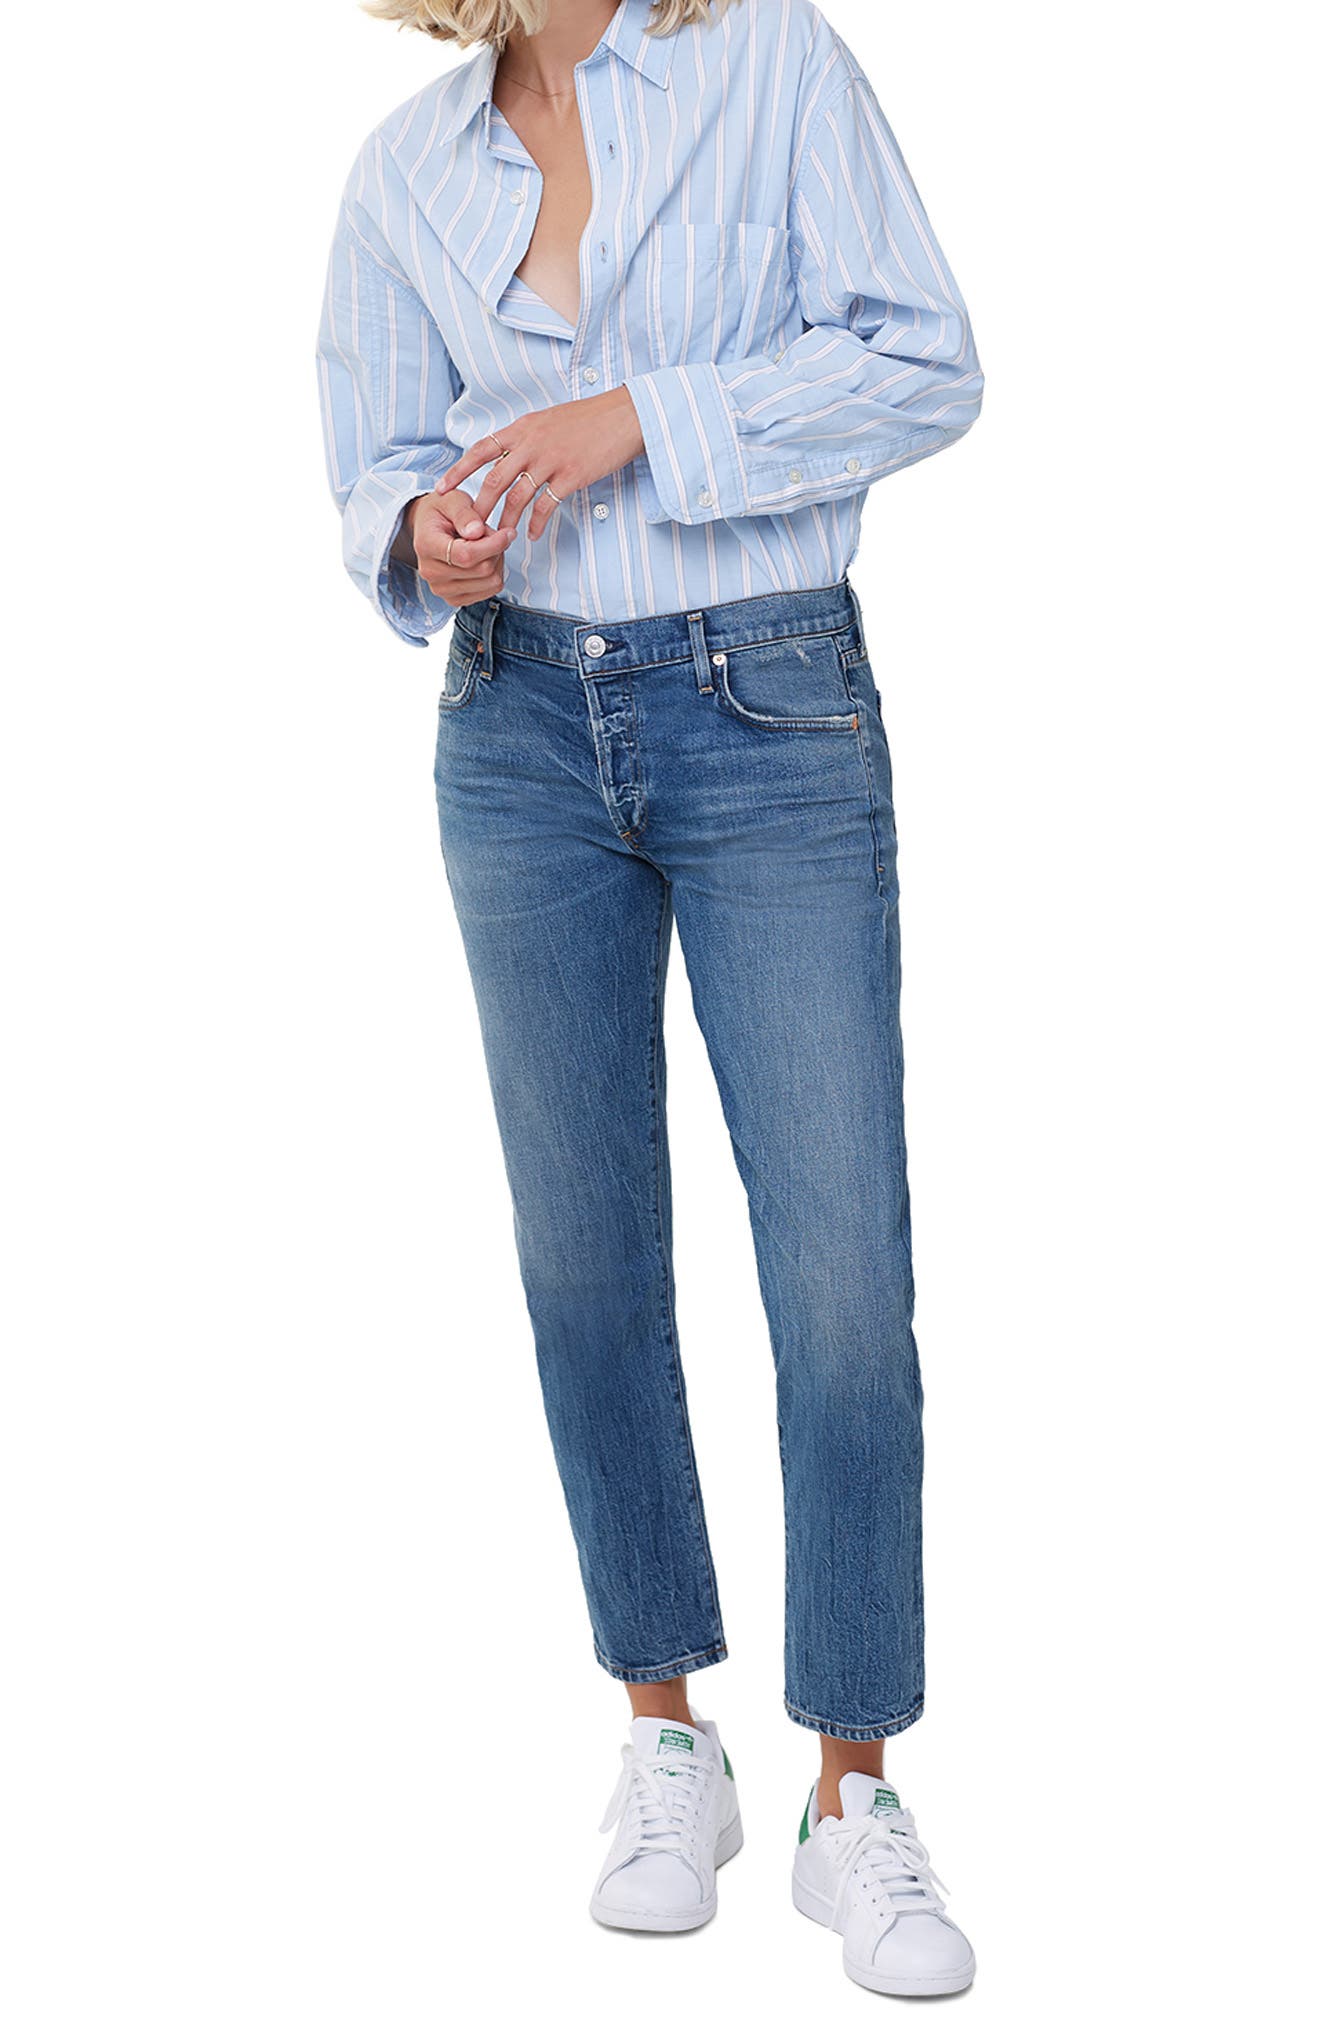 citizen jeans canada